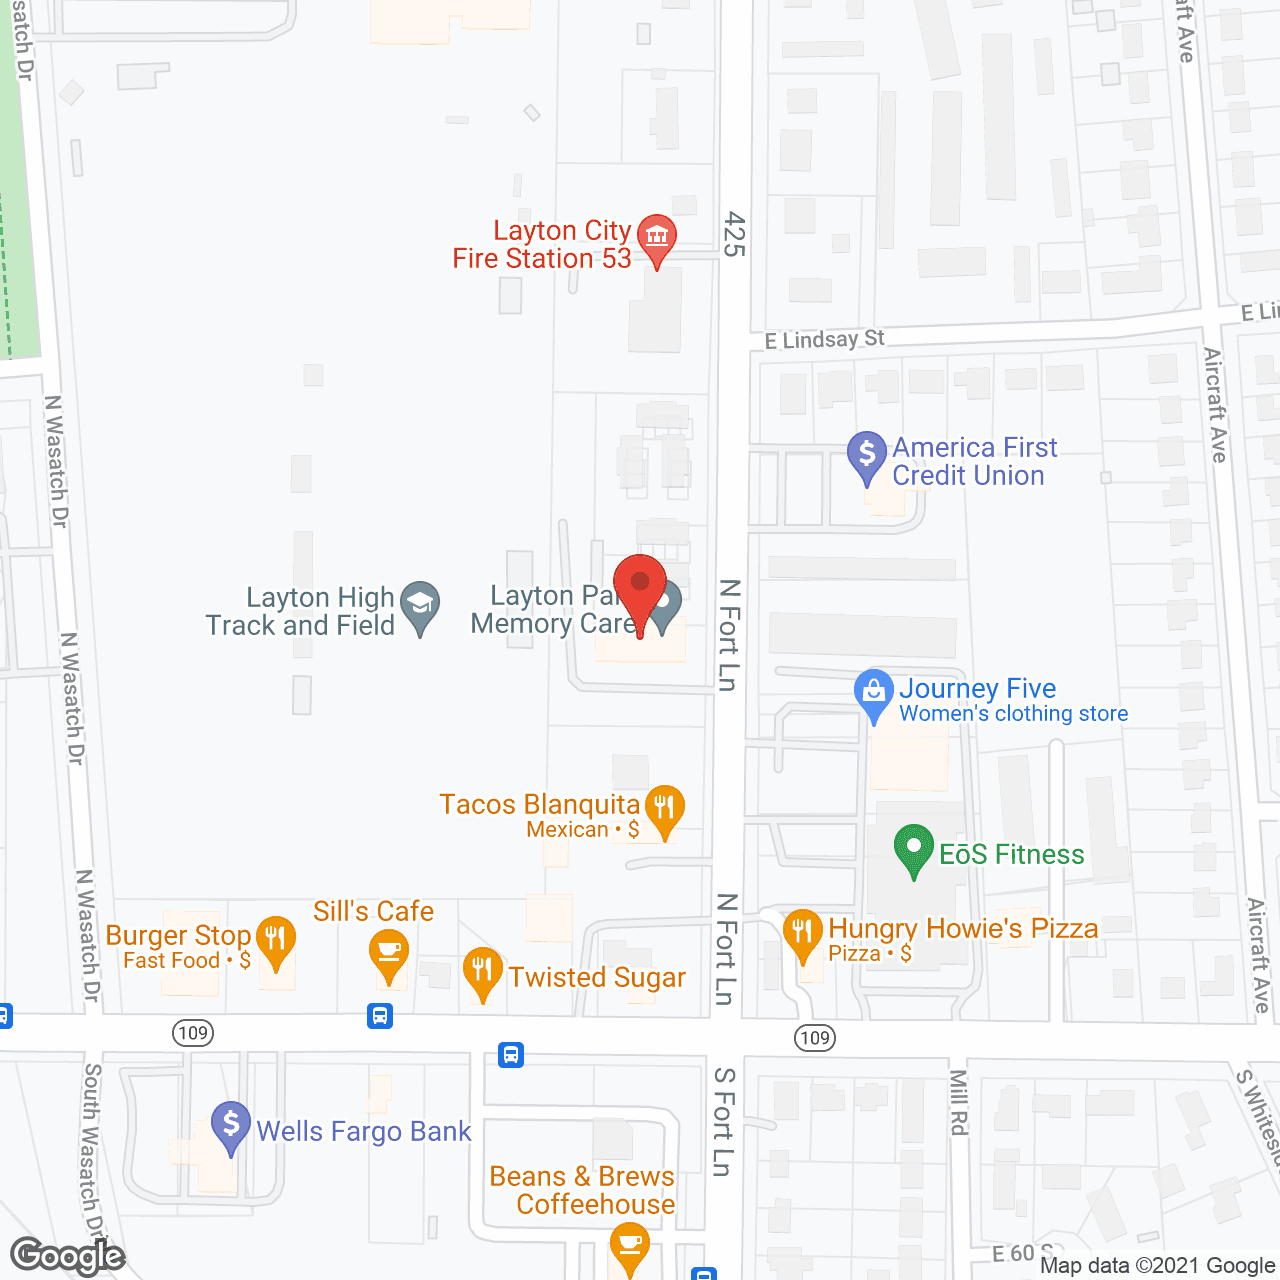 Layton Park Memory Care in google map